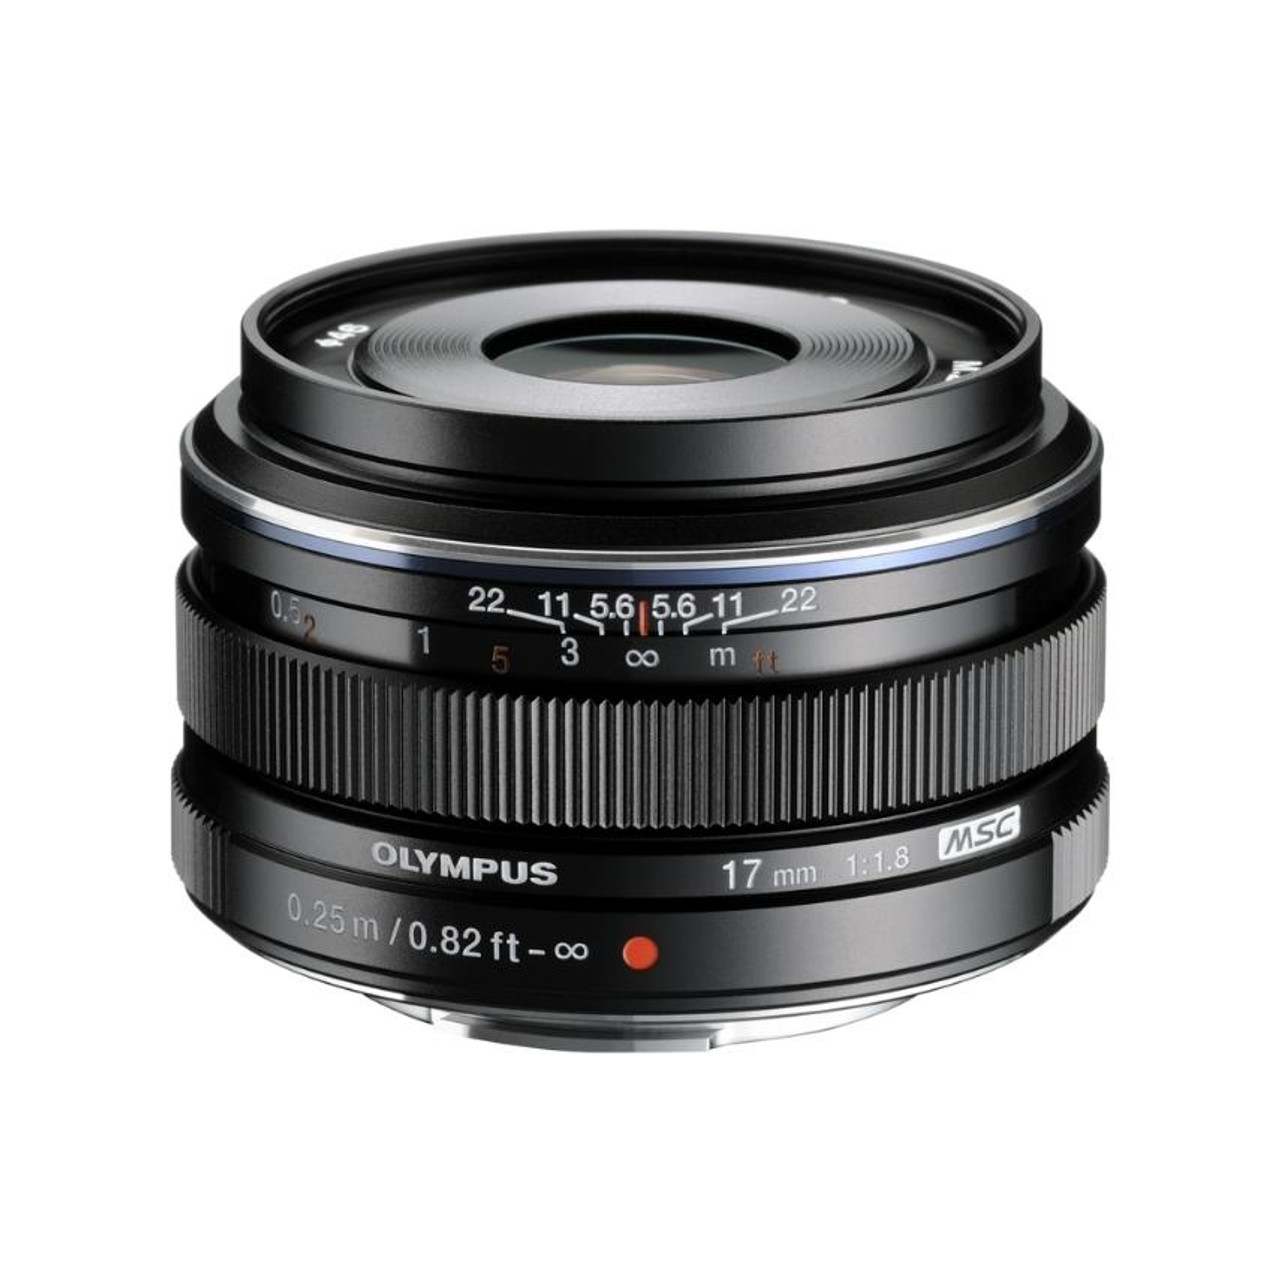 Olympus M.Zuiko Digital 17mm f/1.8 Lens (Black) | Bedfords.com